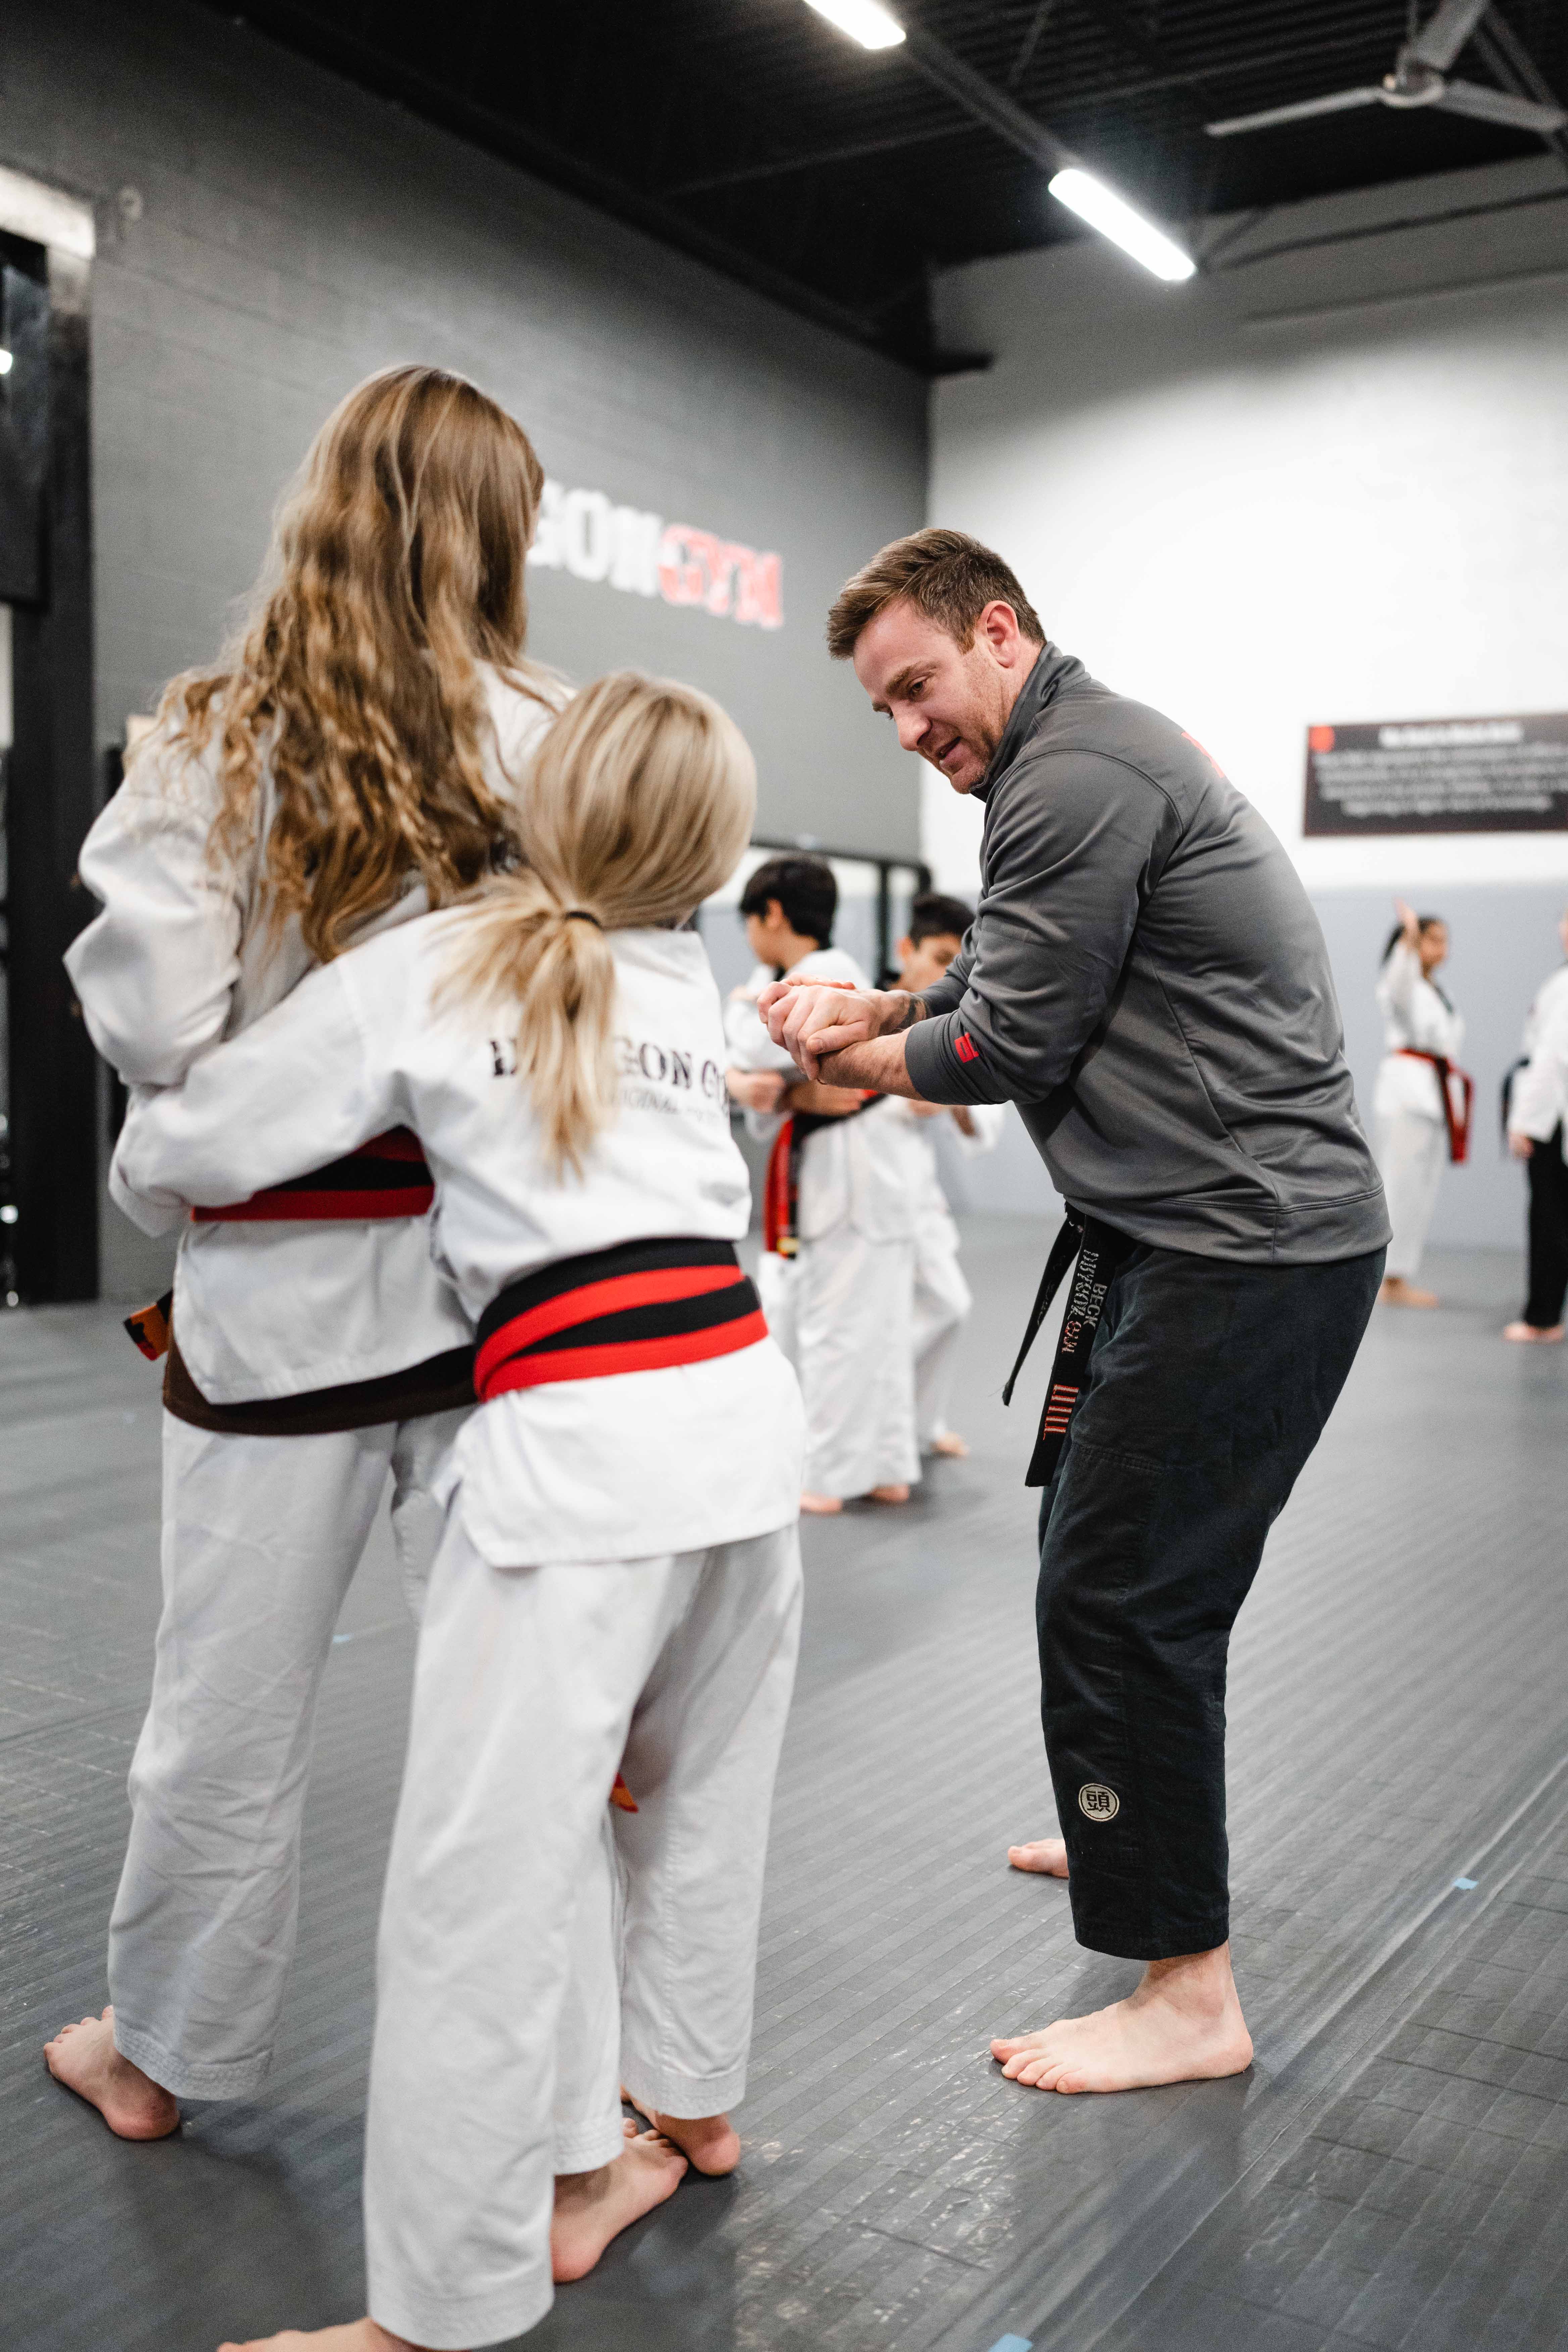 Exton Kids Martial Arts and Self Defense Classes